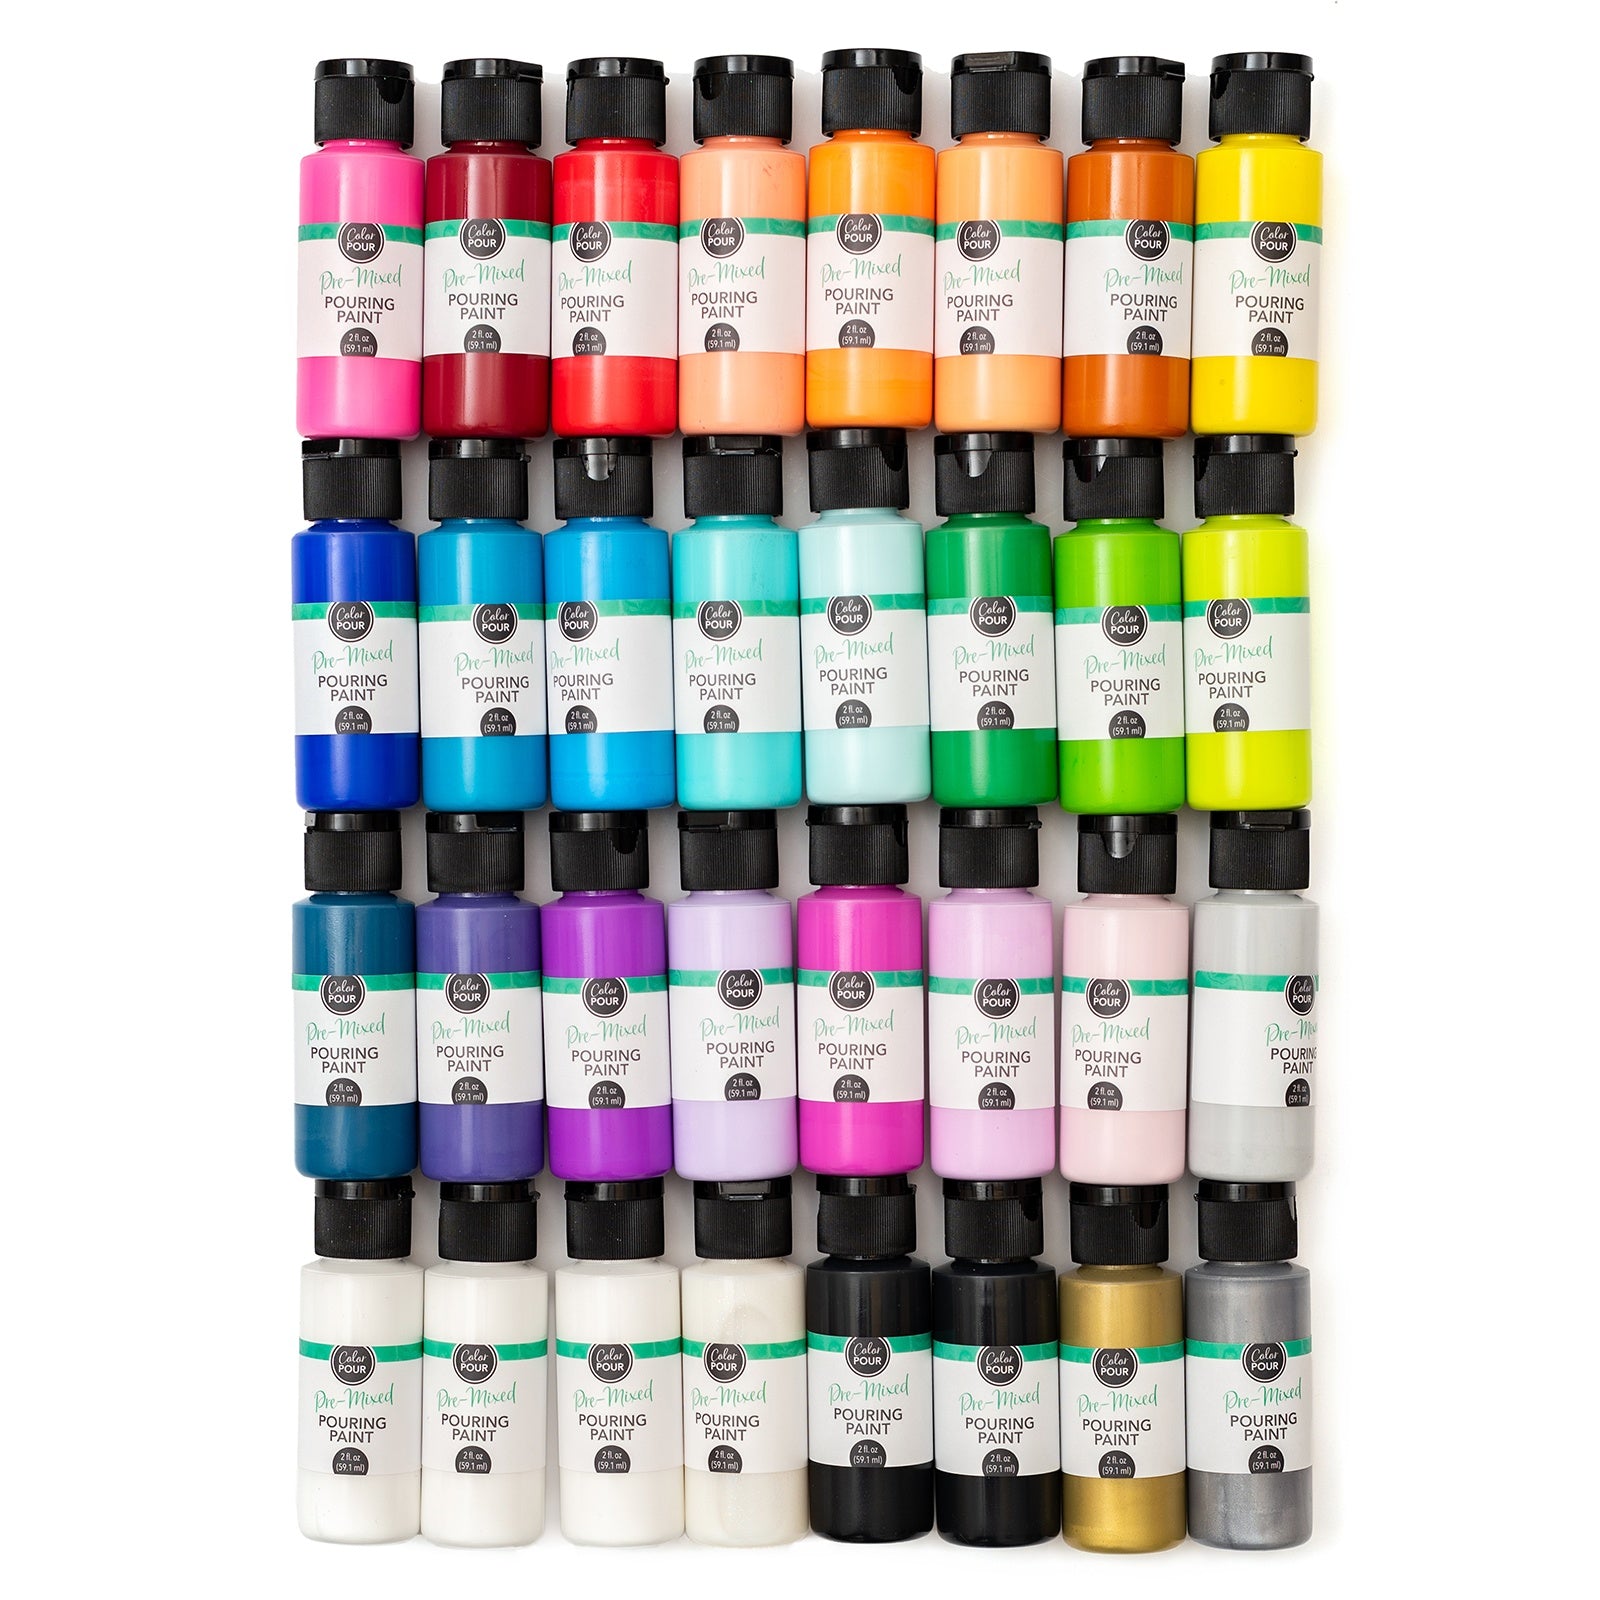 American Crafts Color Pour Magic Pre-Mixed Pouring Paint Kits